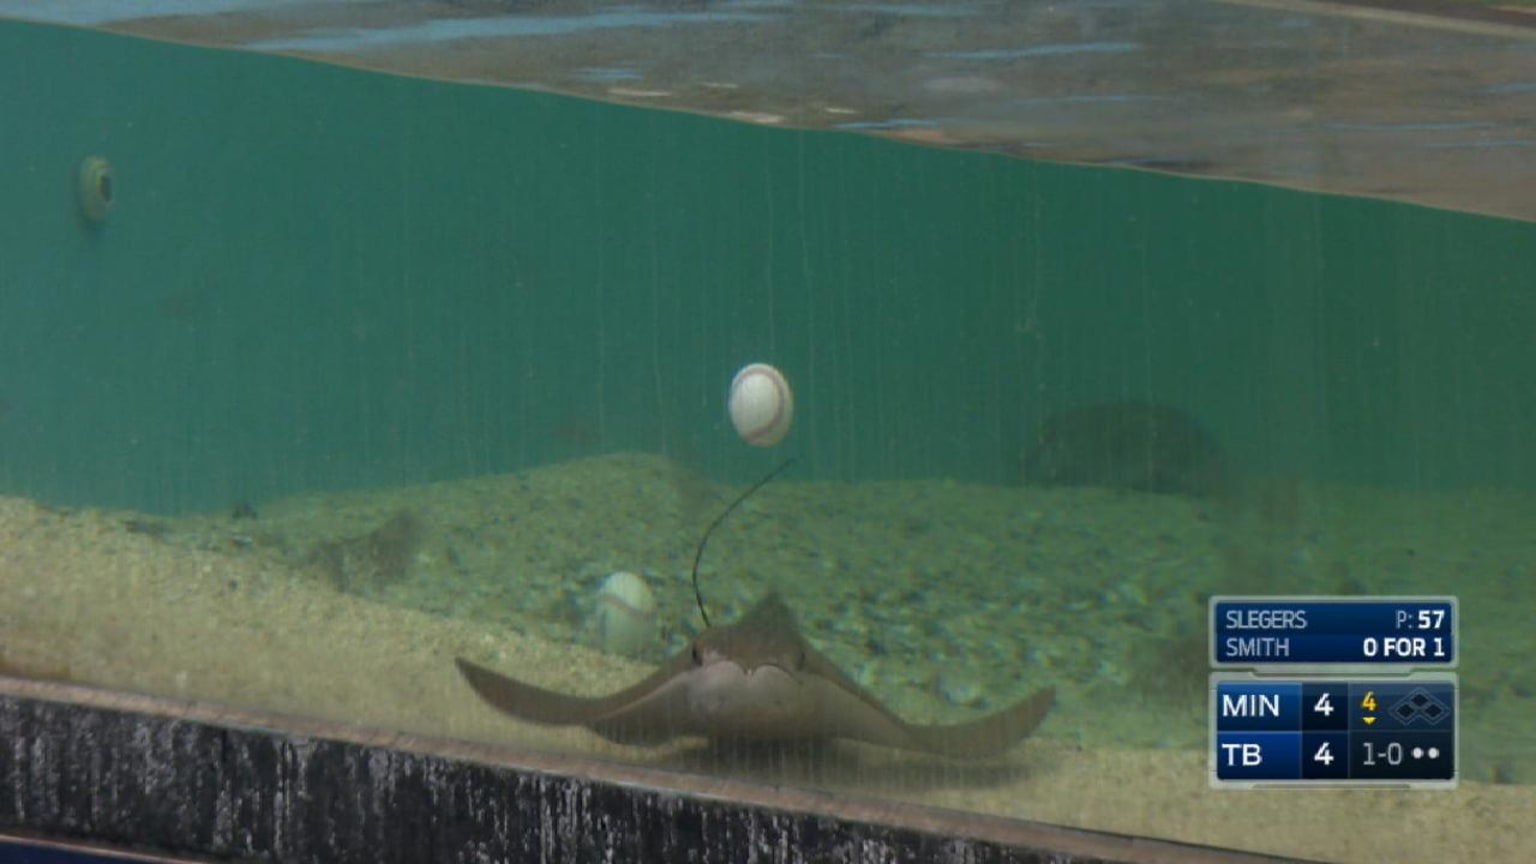 Baseball experiment in fish tank, 09/06/2017